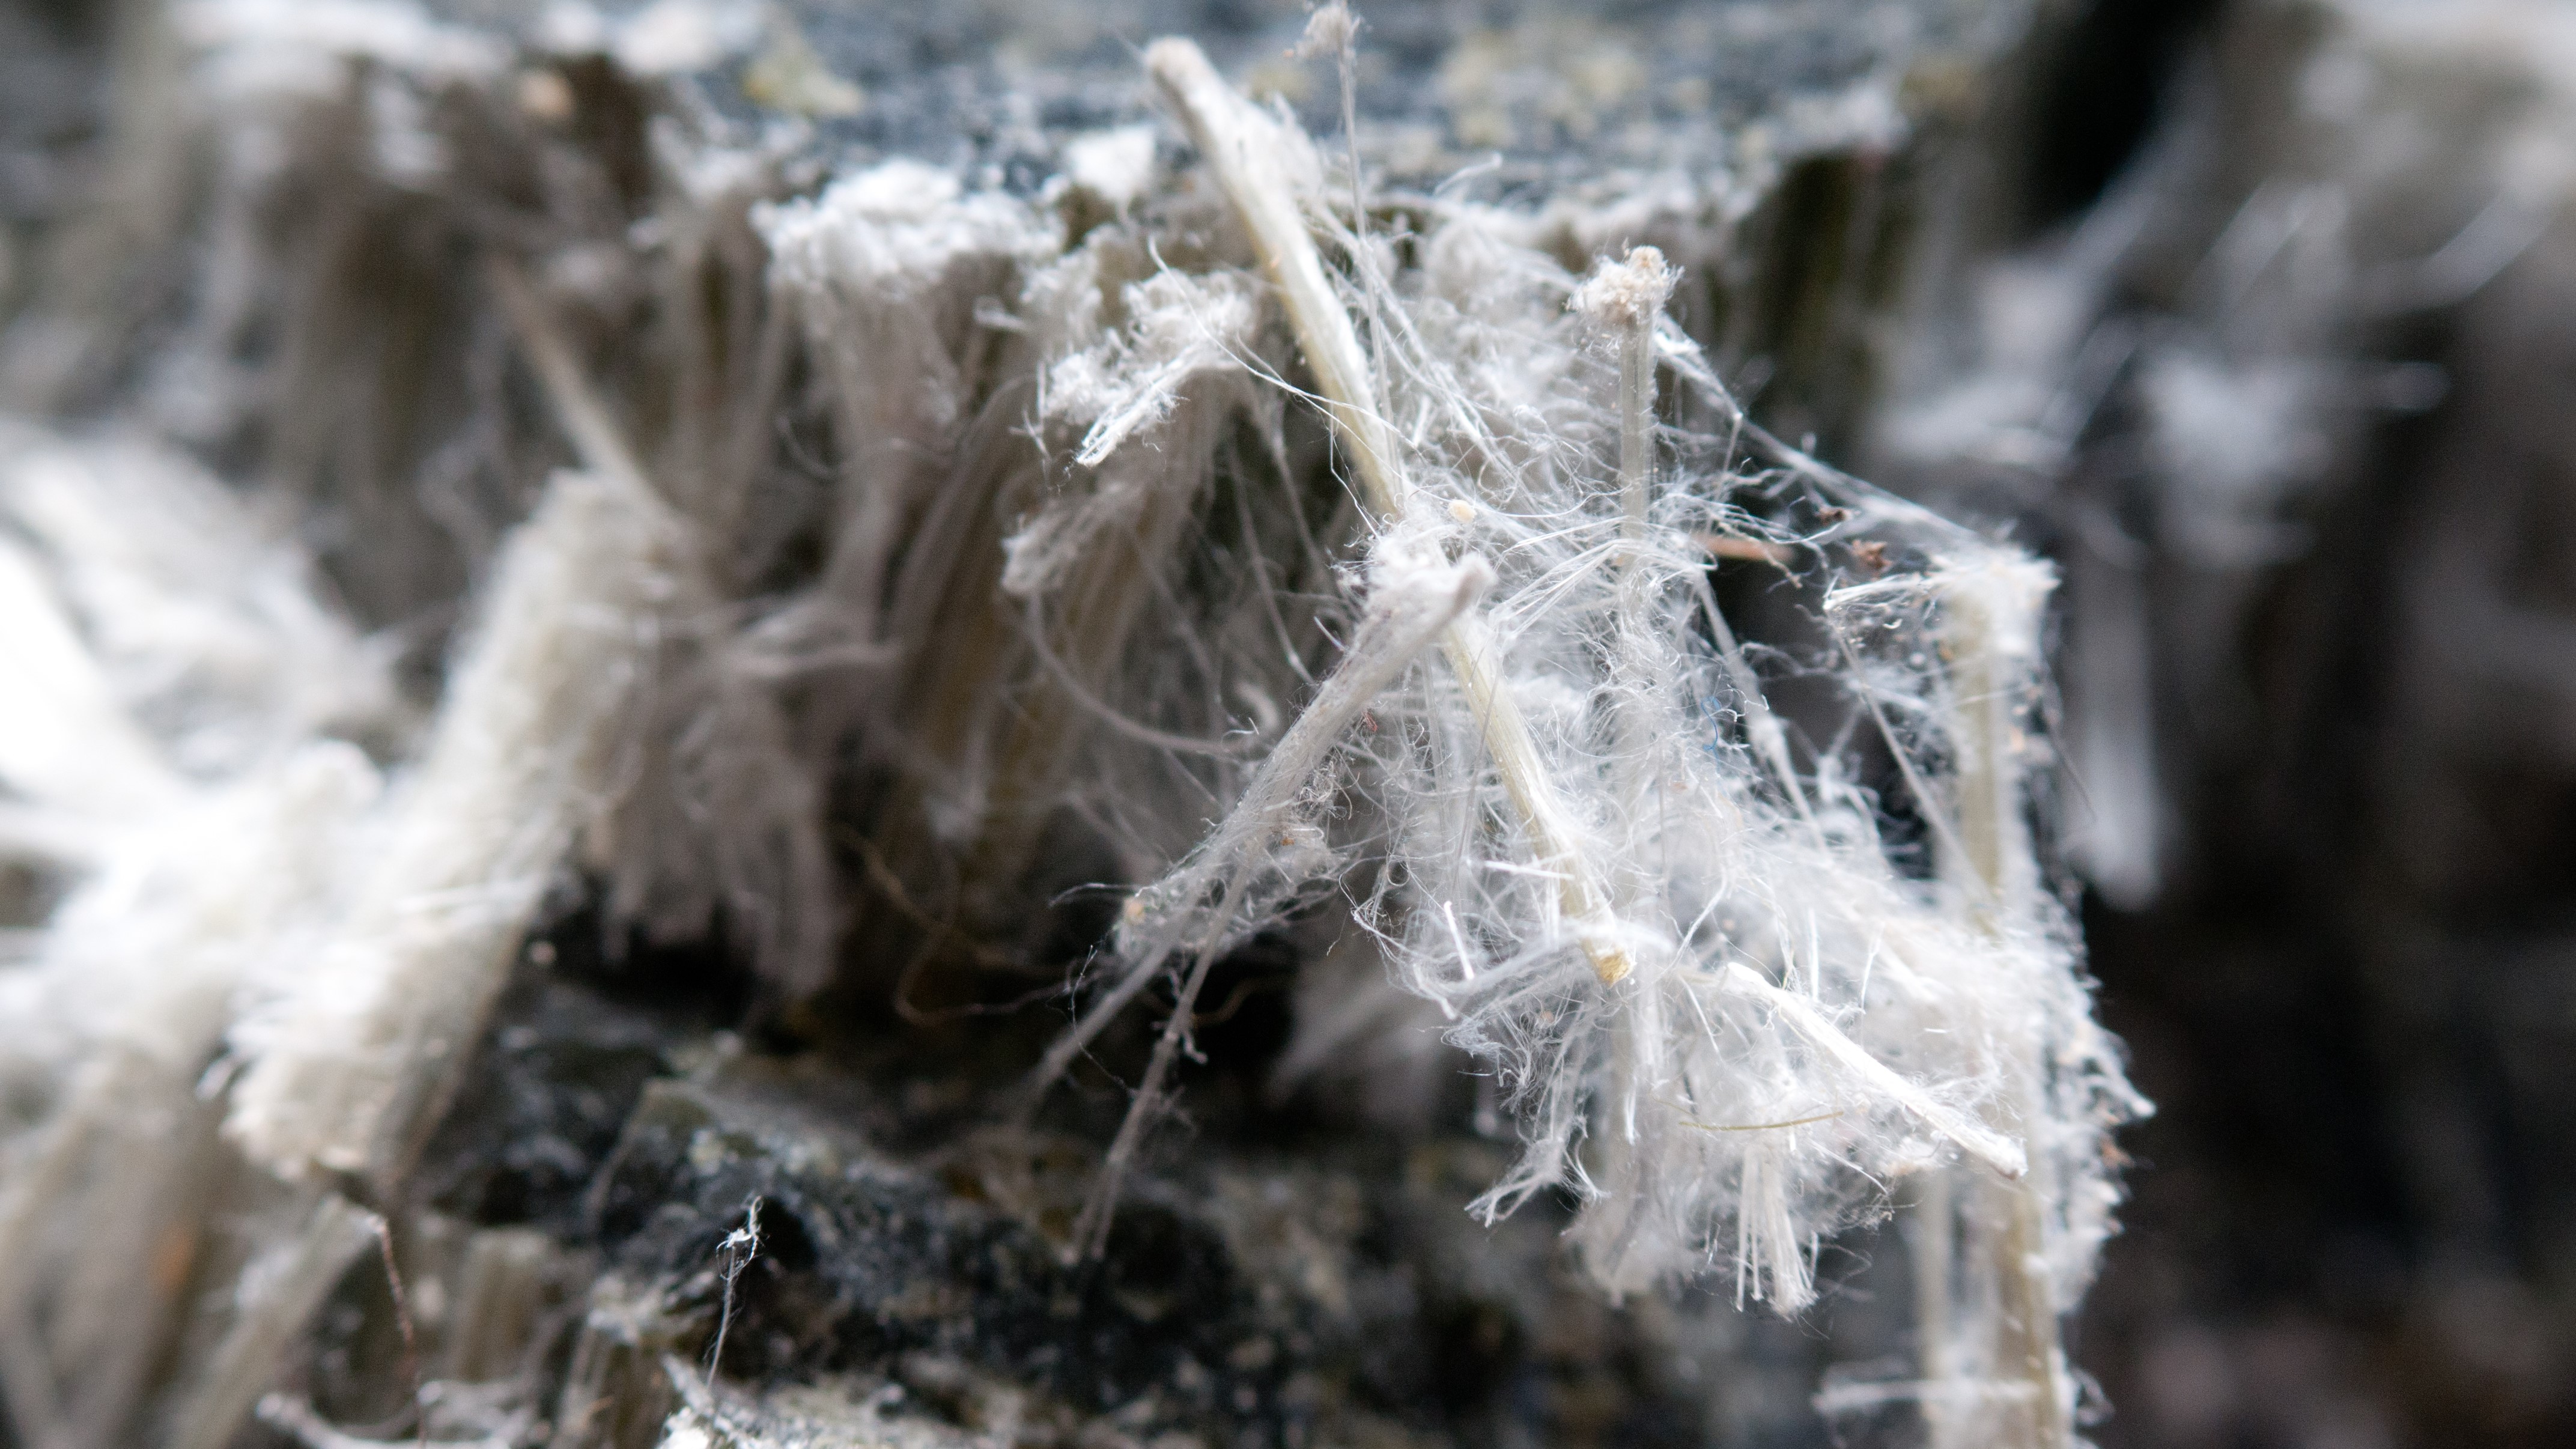 Asbestos chrysotile fibers